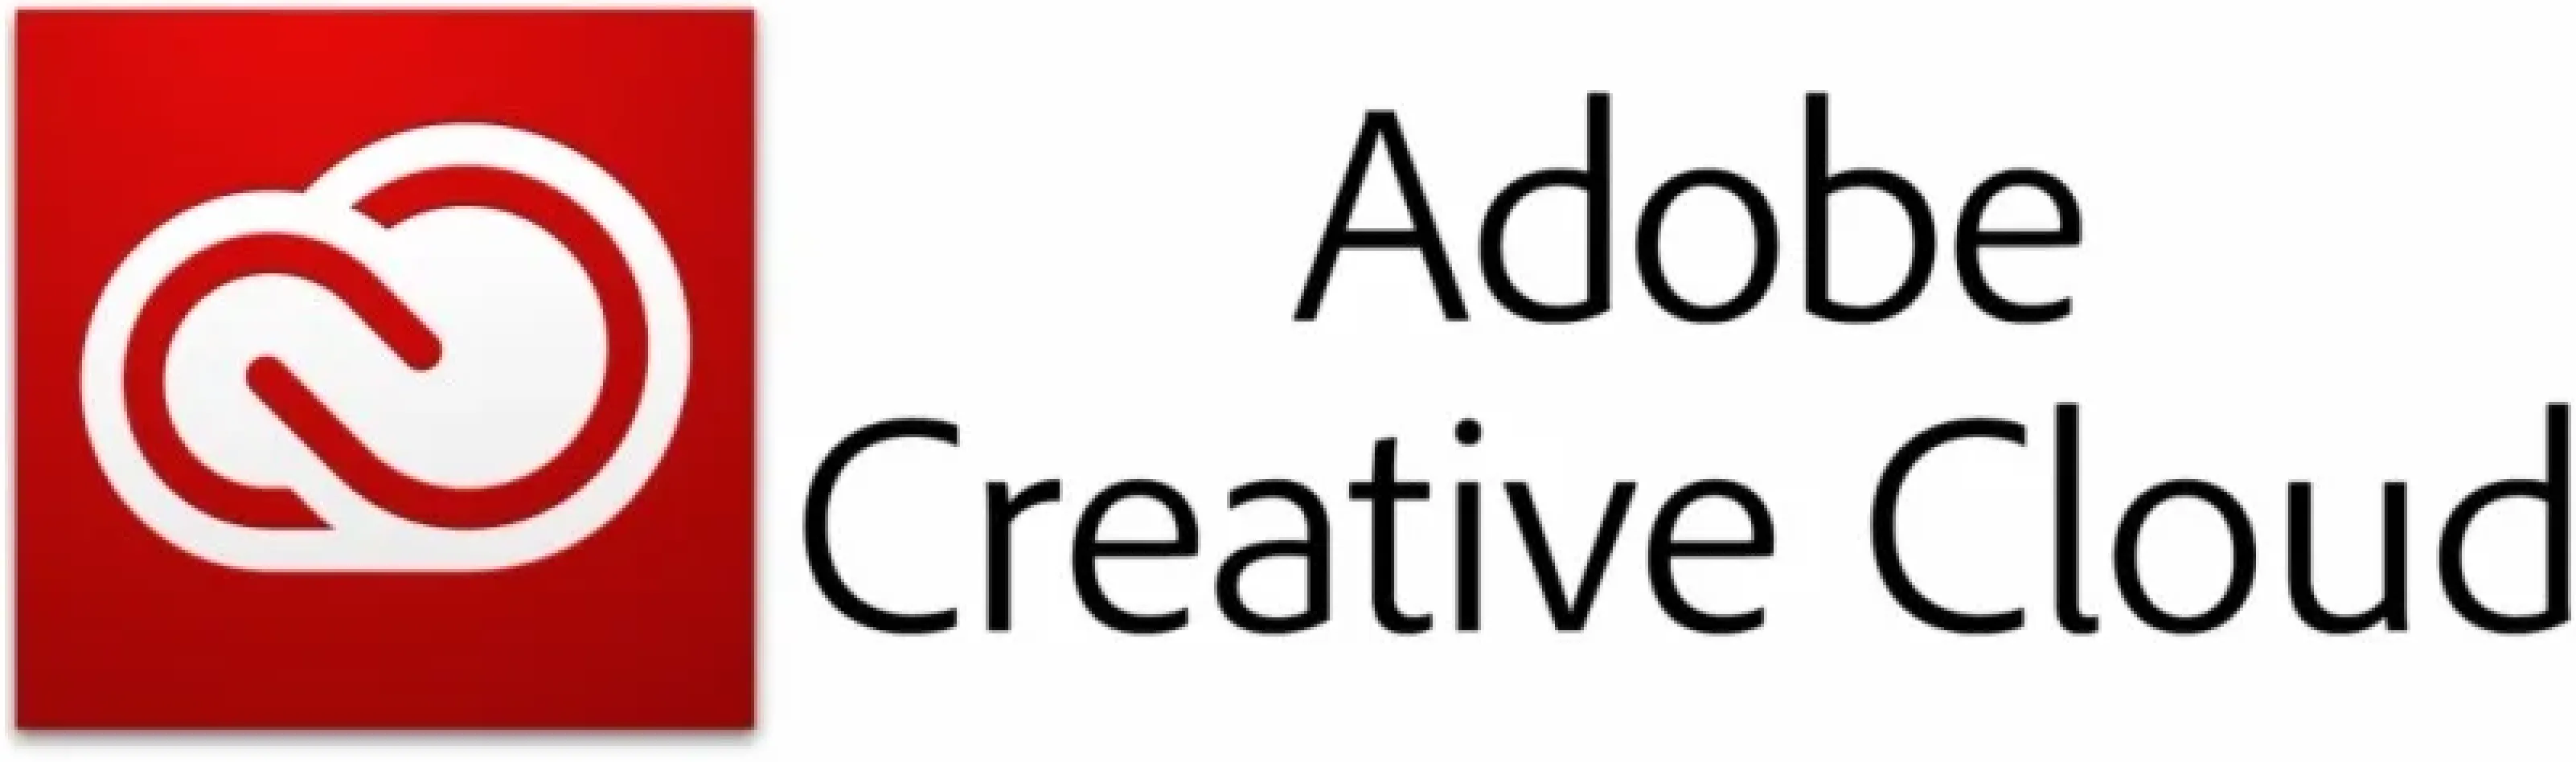 Adobe Creative cloud SSO solution